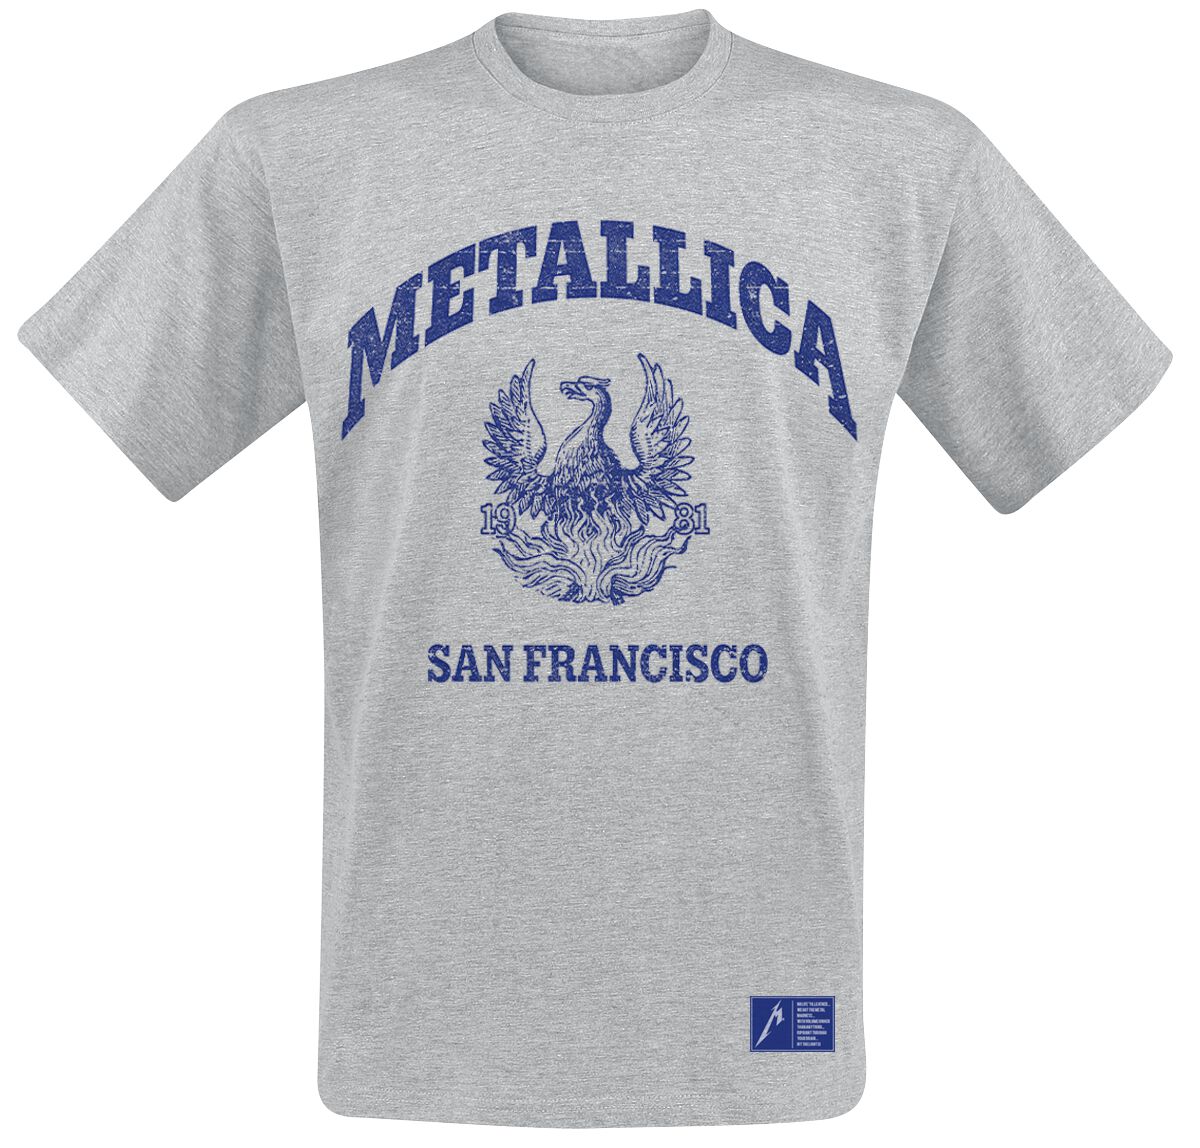 Image of Metallica College Crest T-Shirt grau